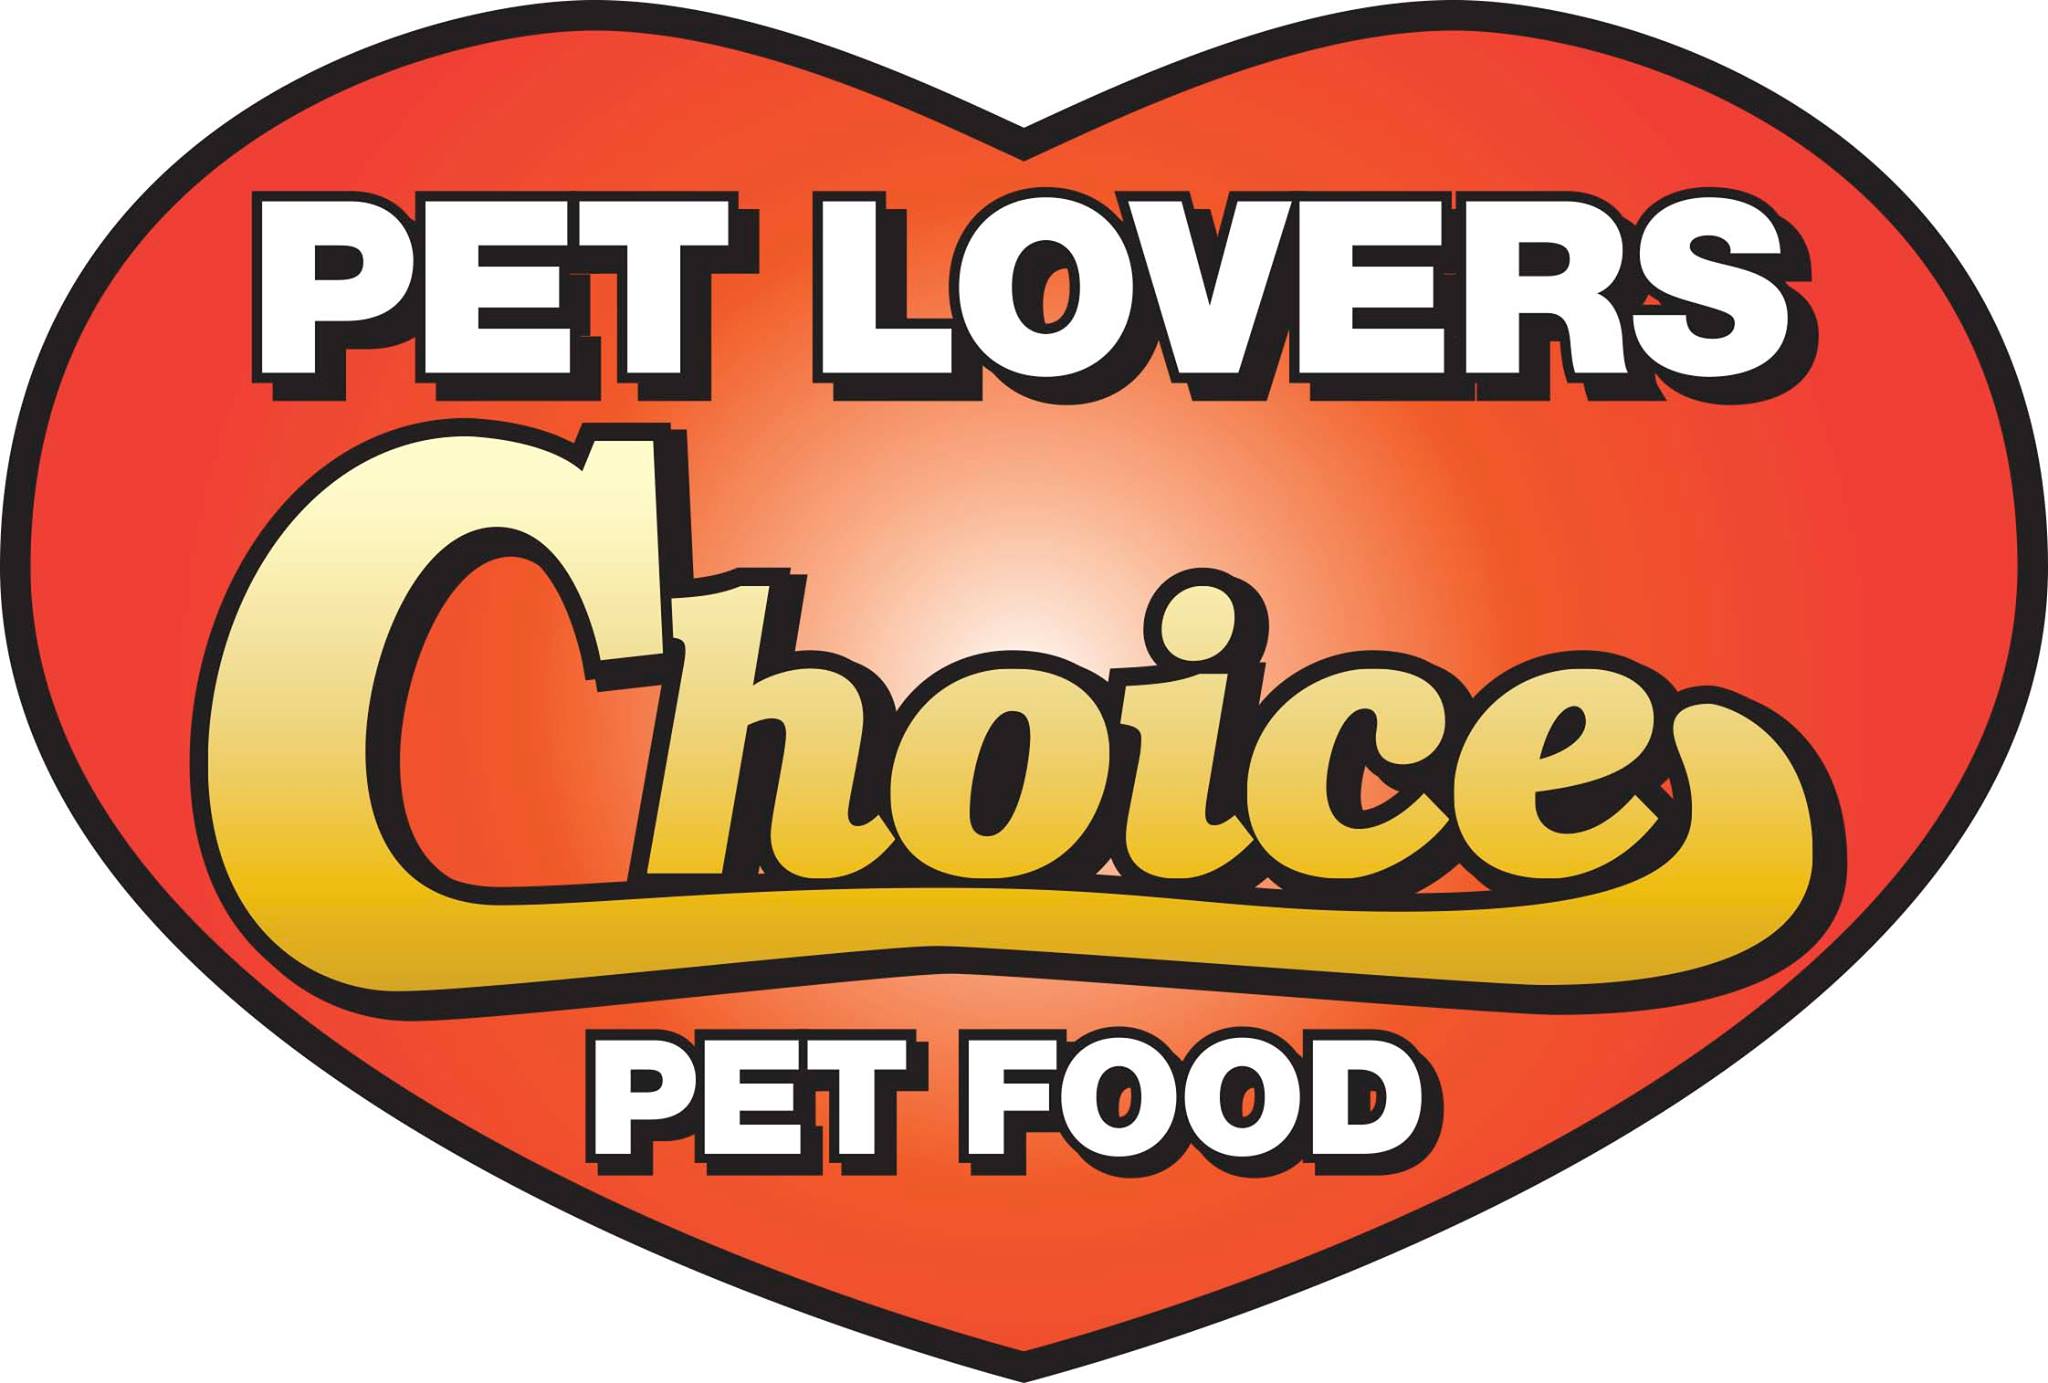 Pet Lovers' Choice - Ground Turkey Bone-in - 5lbs